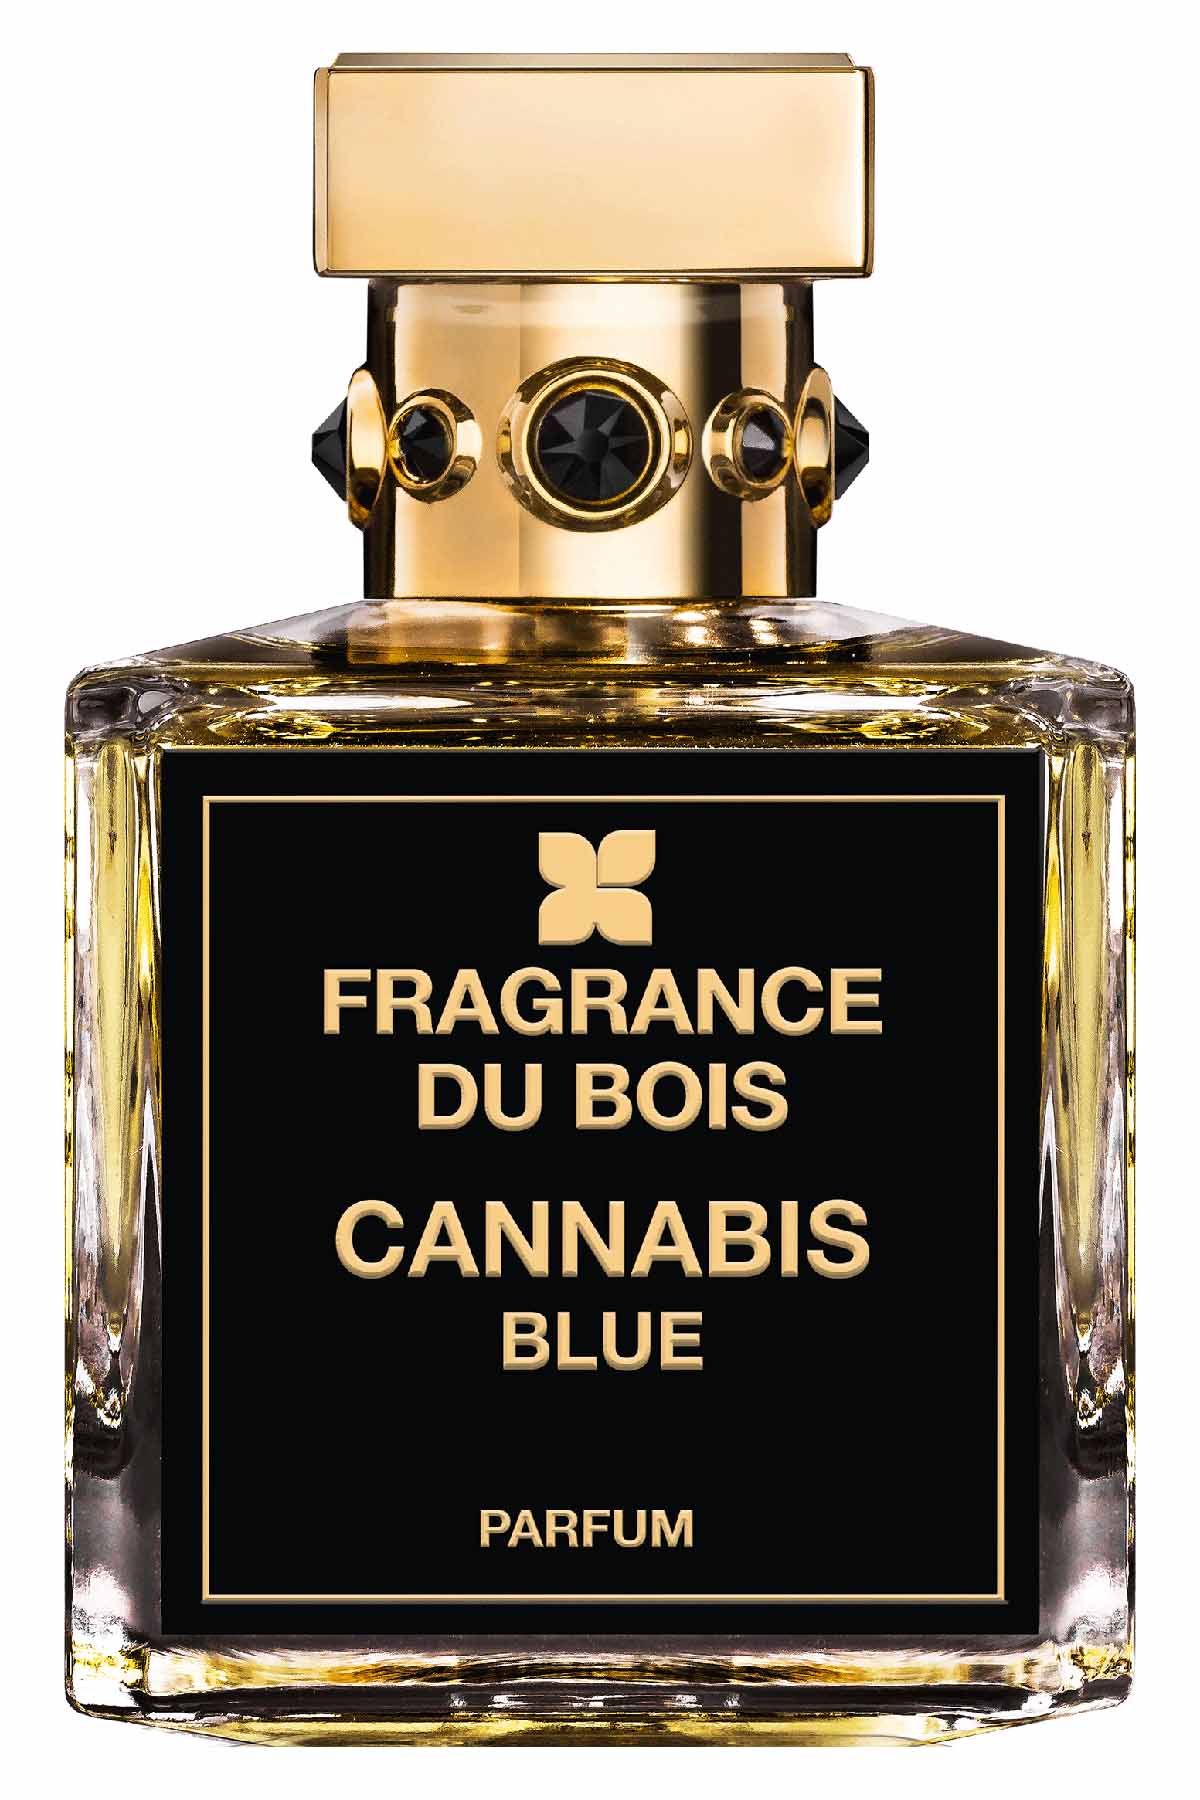 Fragrance Du Bois Cannabis Blue Parfum